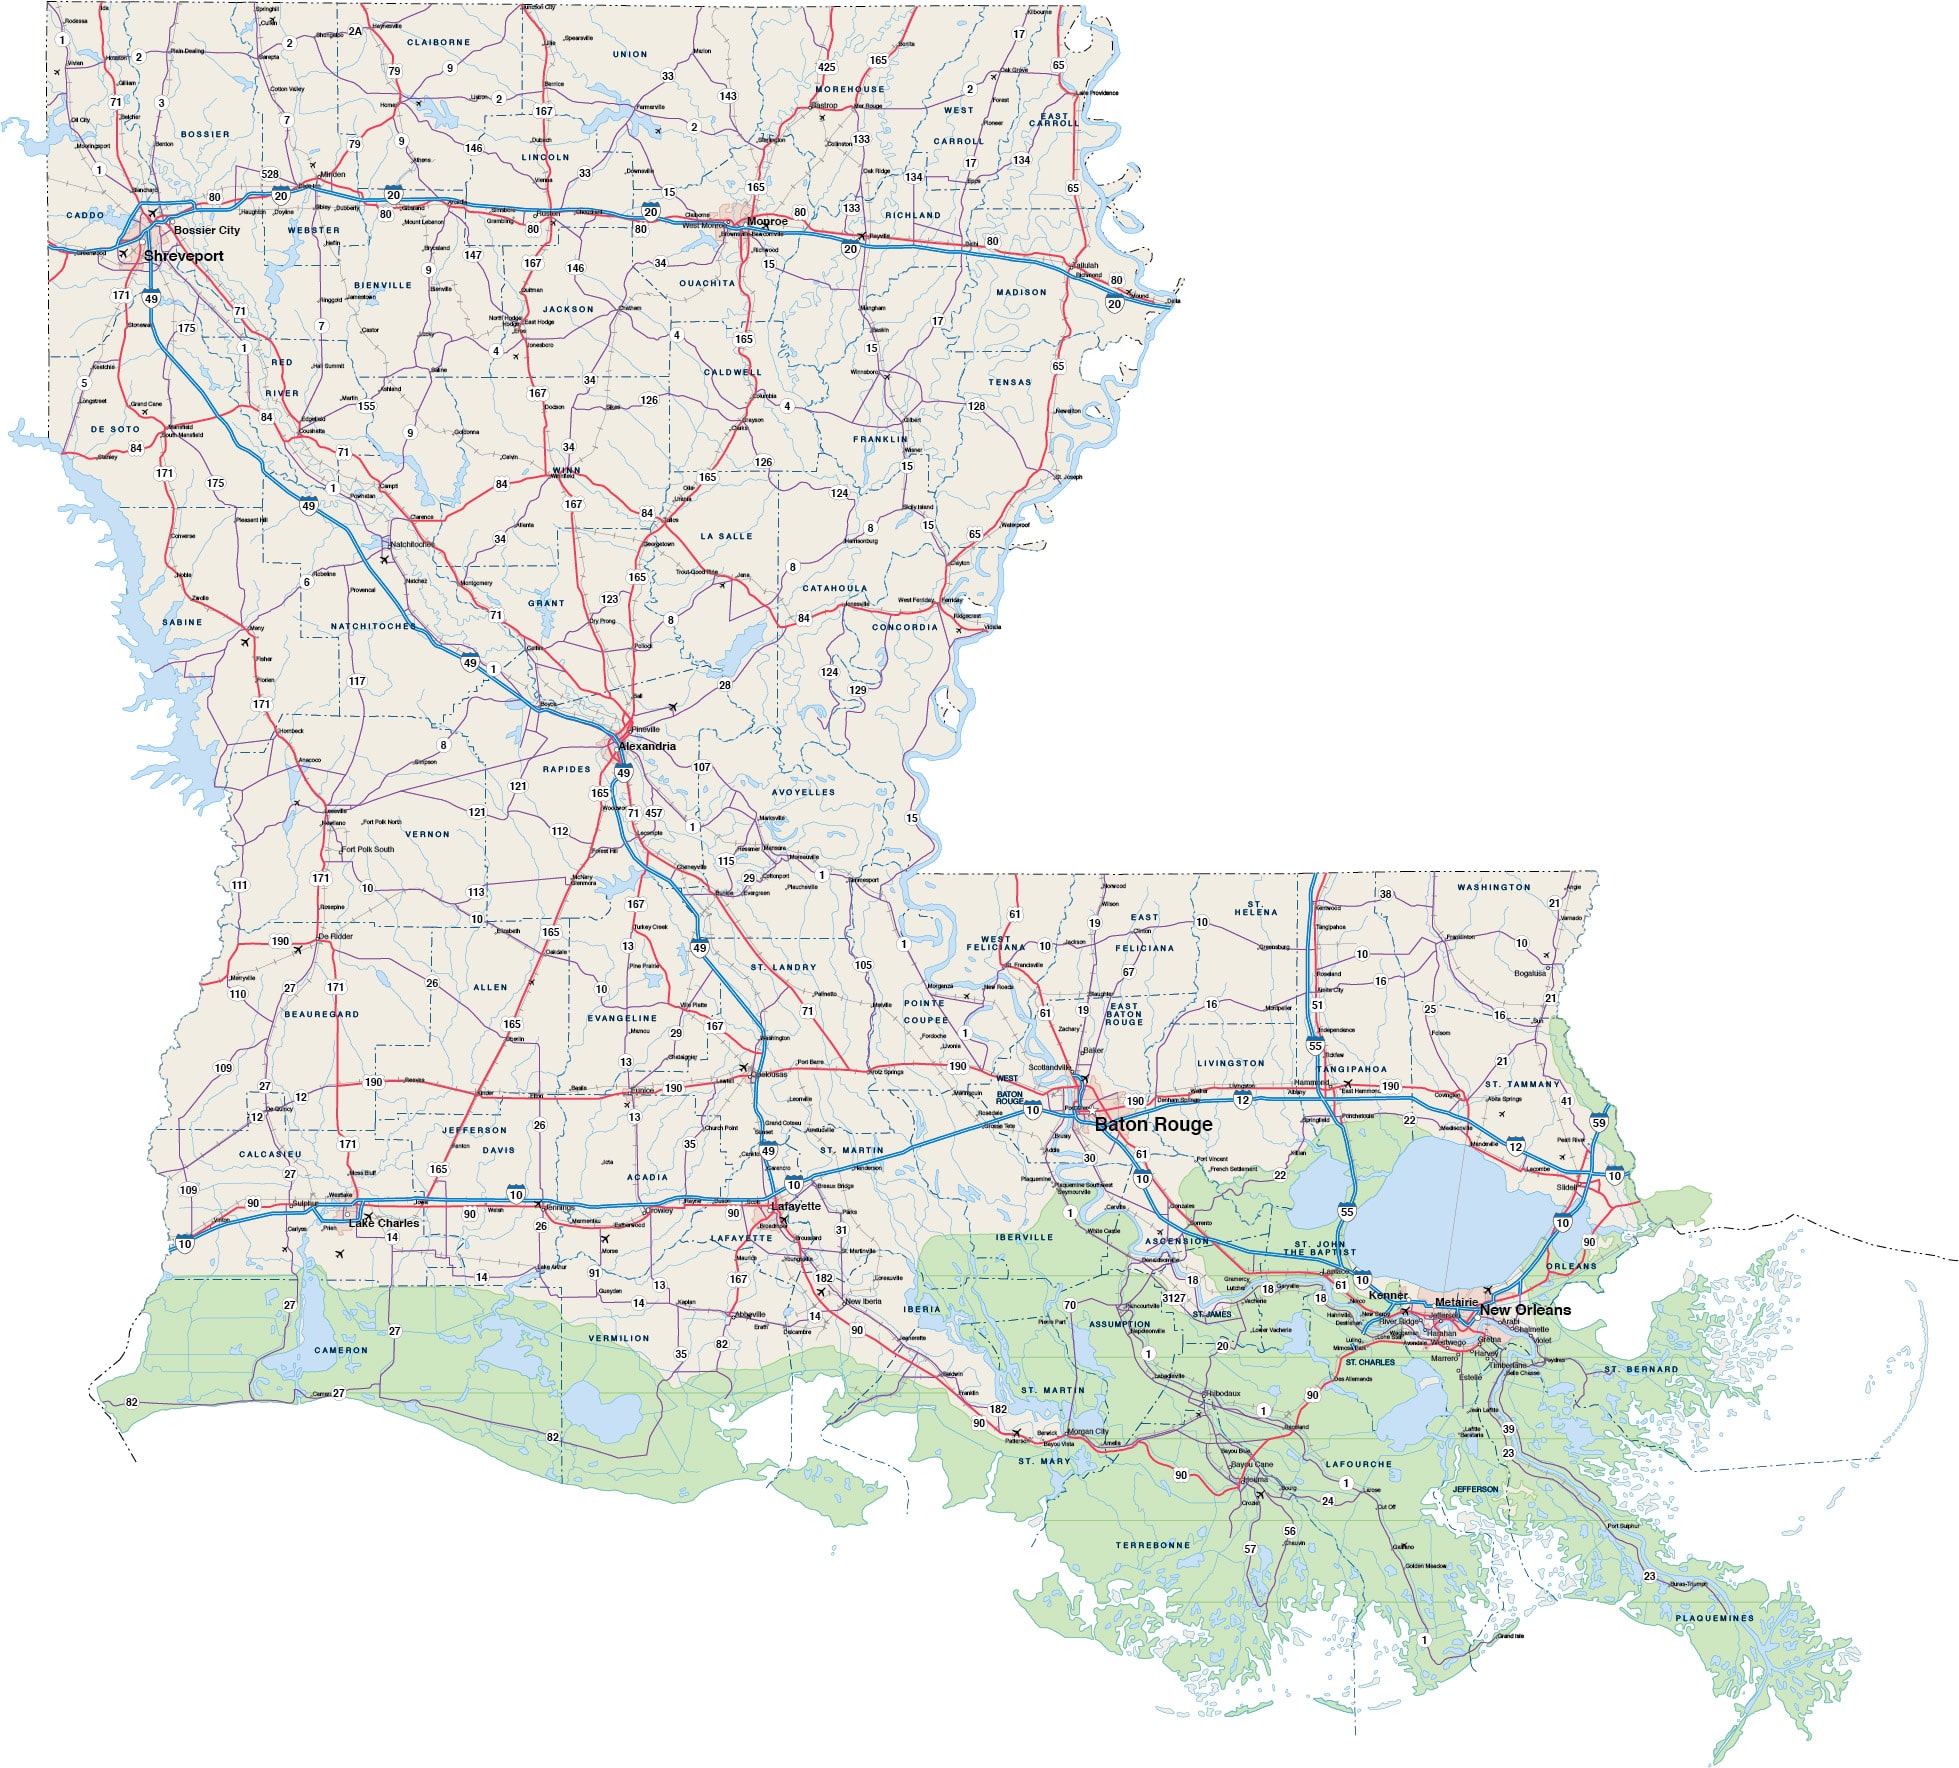 LA · Louisiana · Public Domain maps by PAT, the free, open source, portable  atlas